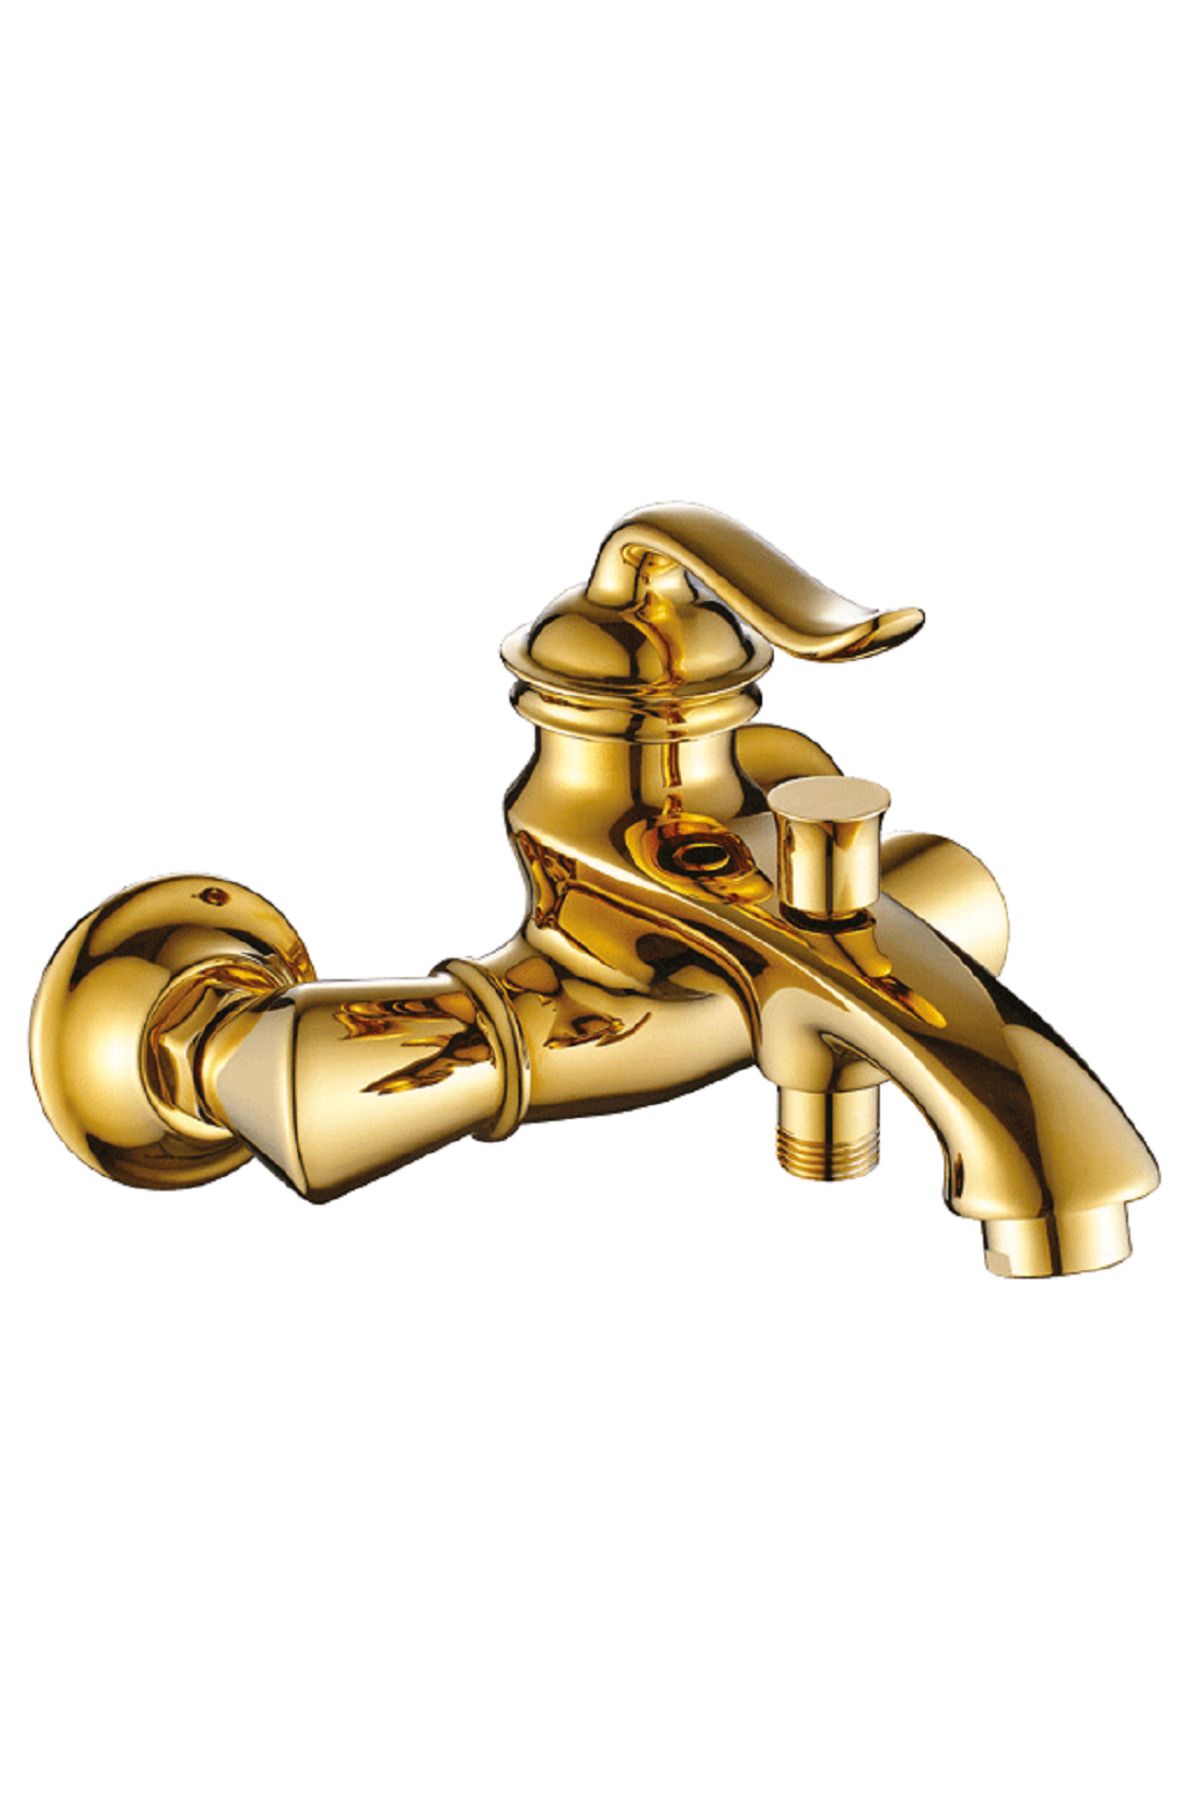 ACAR Elegand Gold Serisi, Pirinç Banyo Bataryası, Banyo Armatür, Altın Rengi Banyo Bataryası